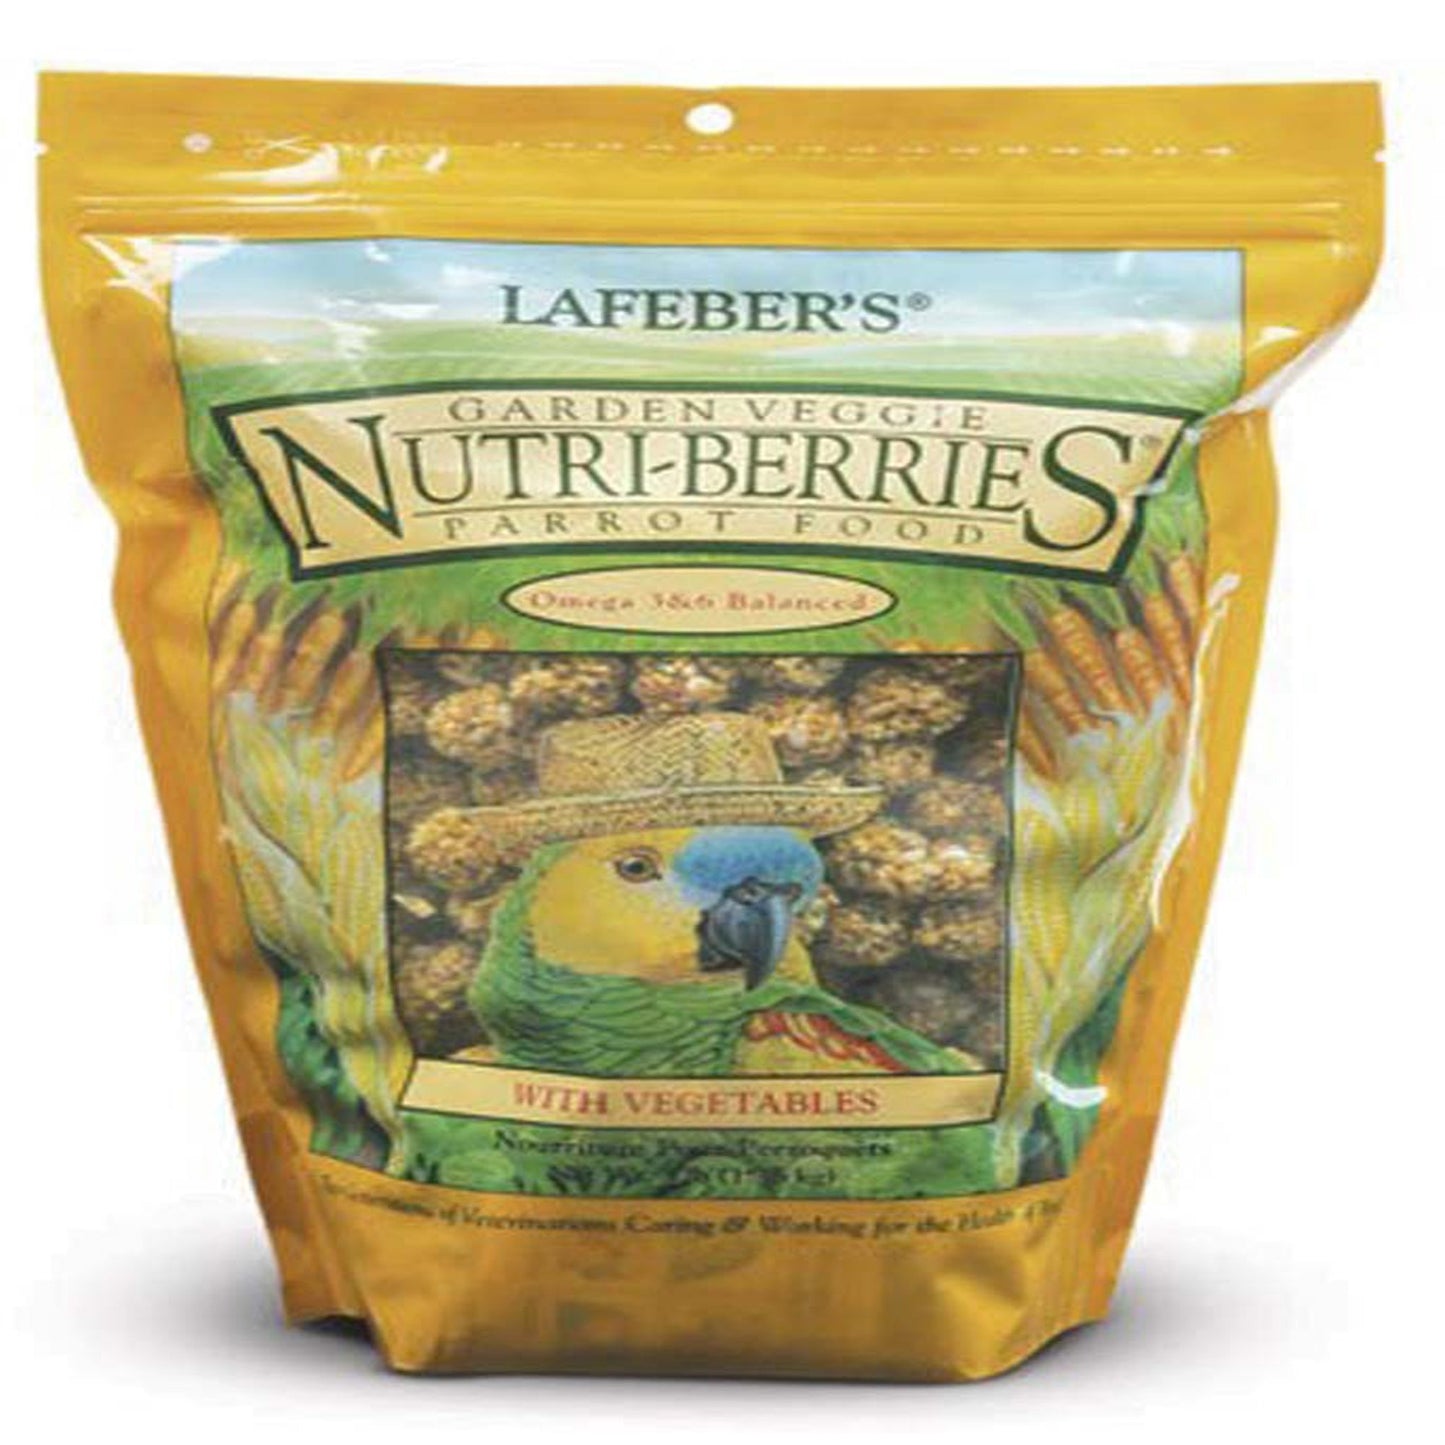 Lafeber Company Garden Veggie Nutri-Berries Parrot Food 1ea/3 lb